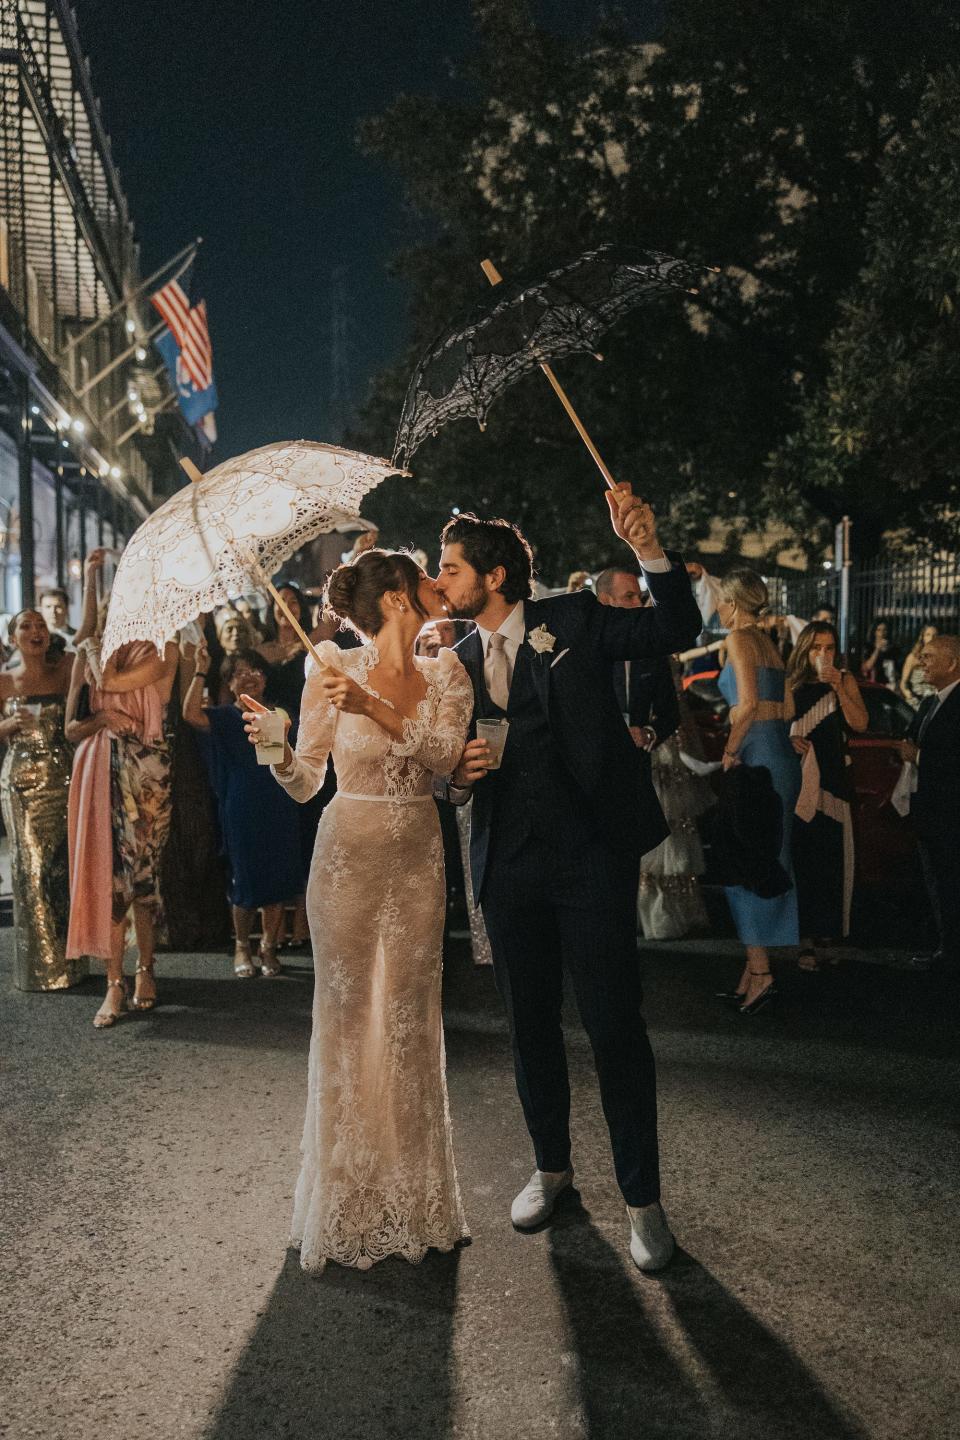 A bride and groom kiss holding umbrellas as they do a second line parade.